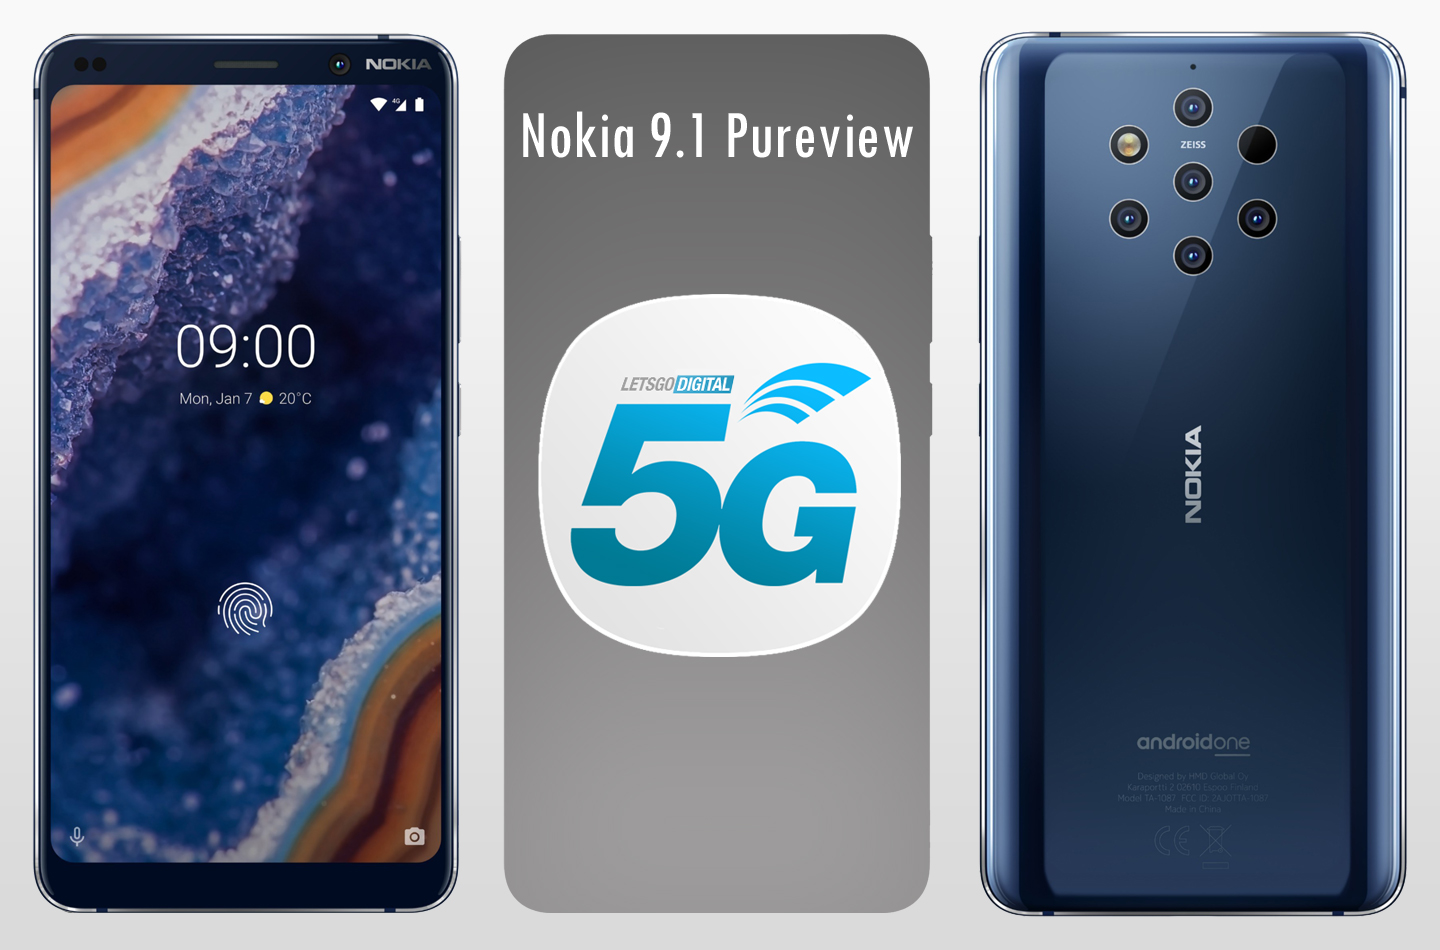 Nokia 5G smartphone